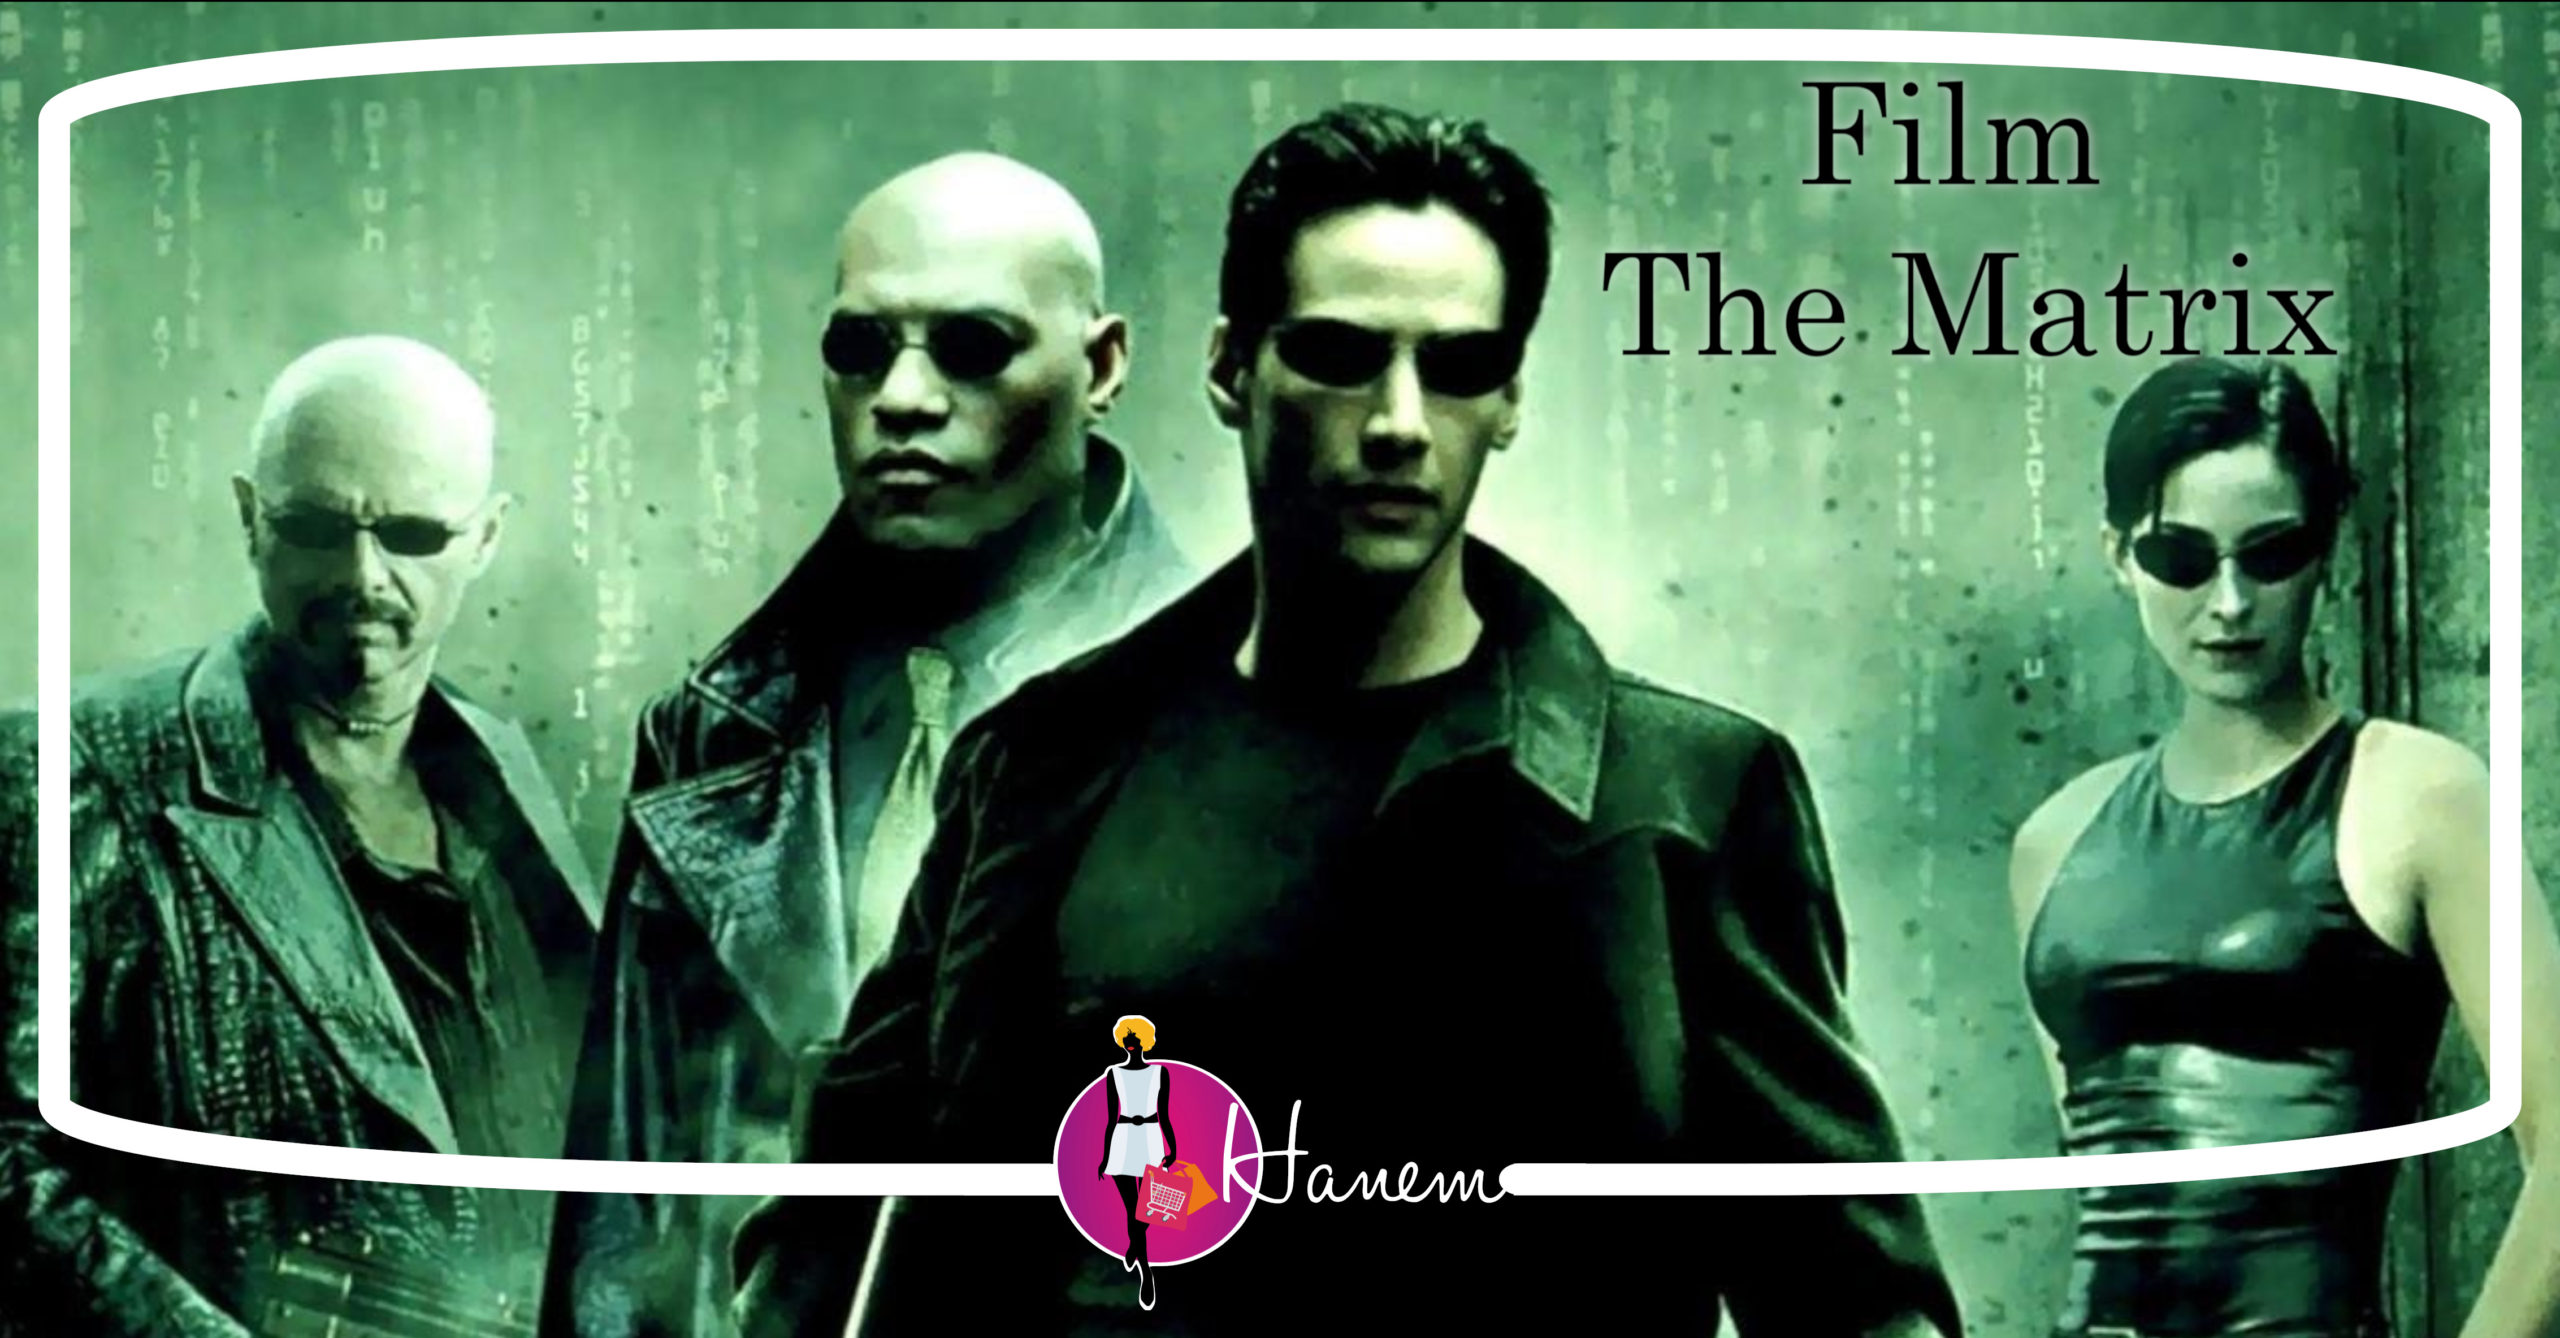 Film The Matrix